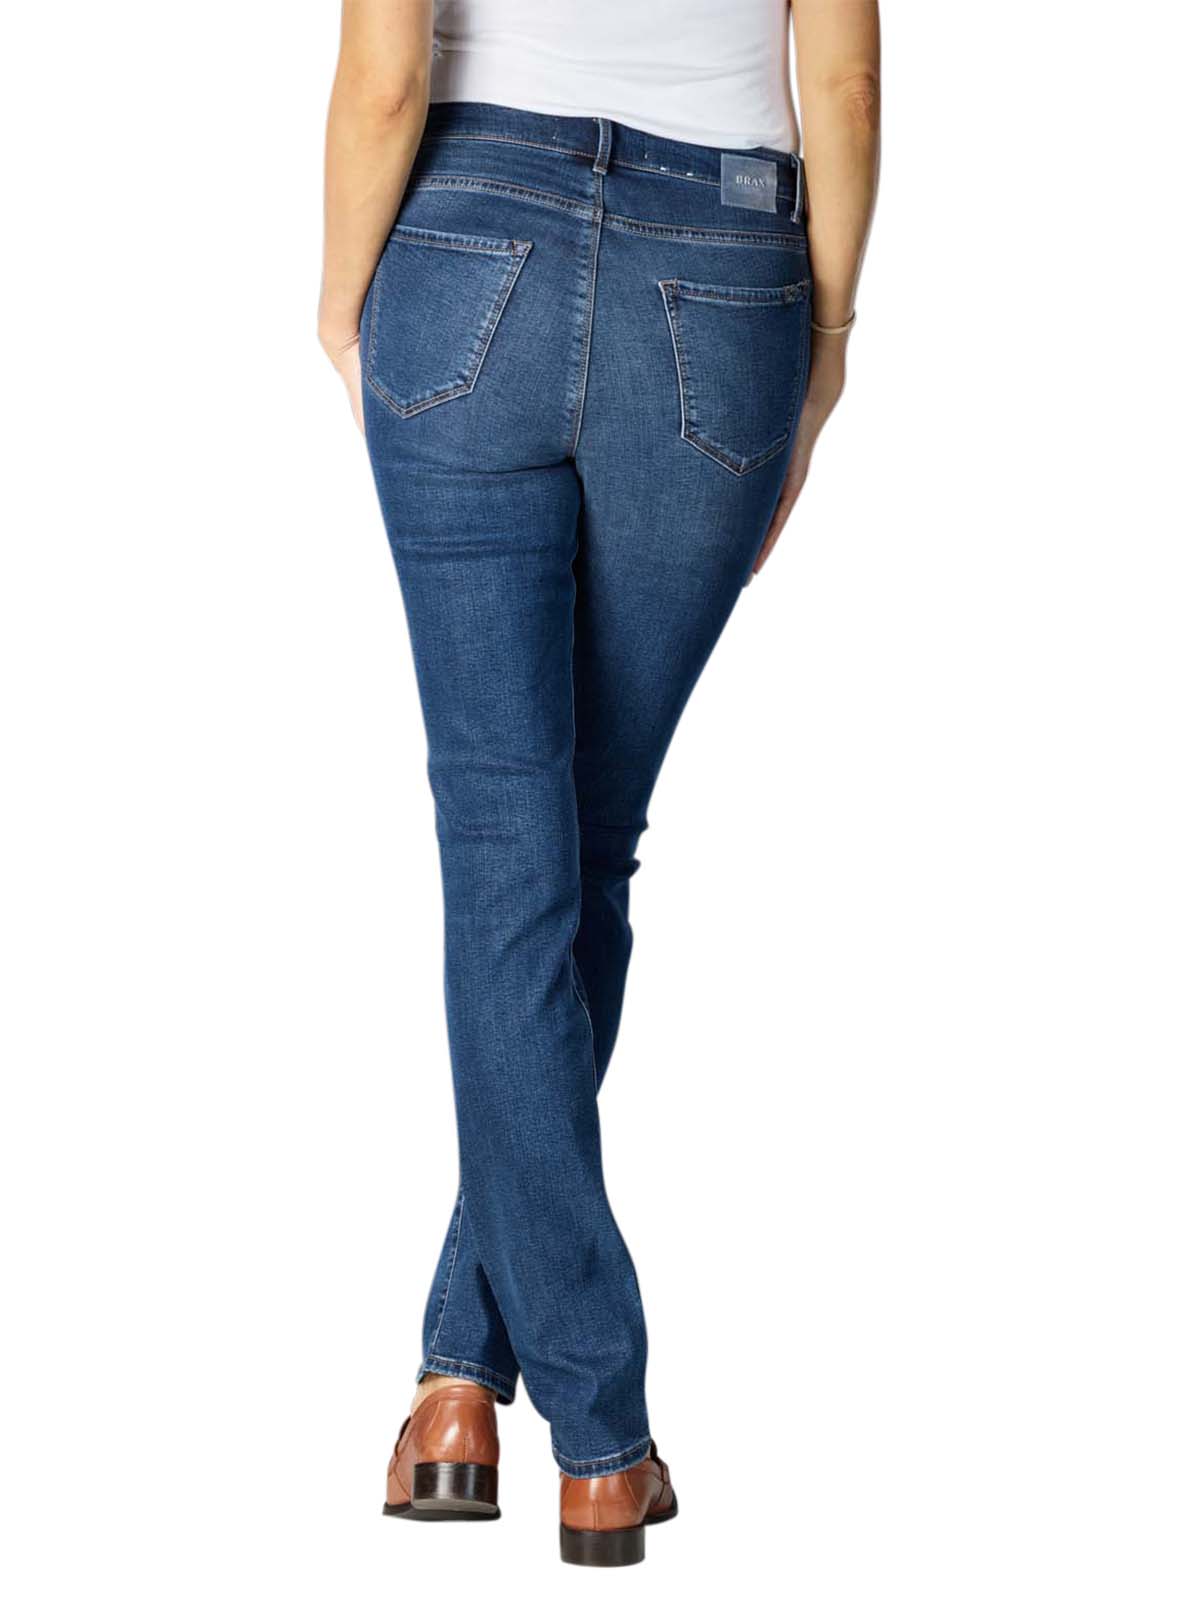 dok Sloppenwijk Annoteren Brax Shakira Jeans Skinny Fit blue Brax Women's Jeans | Free Shipping on  BEBASIC.CH - SIMPLY LOOK GOOD